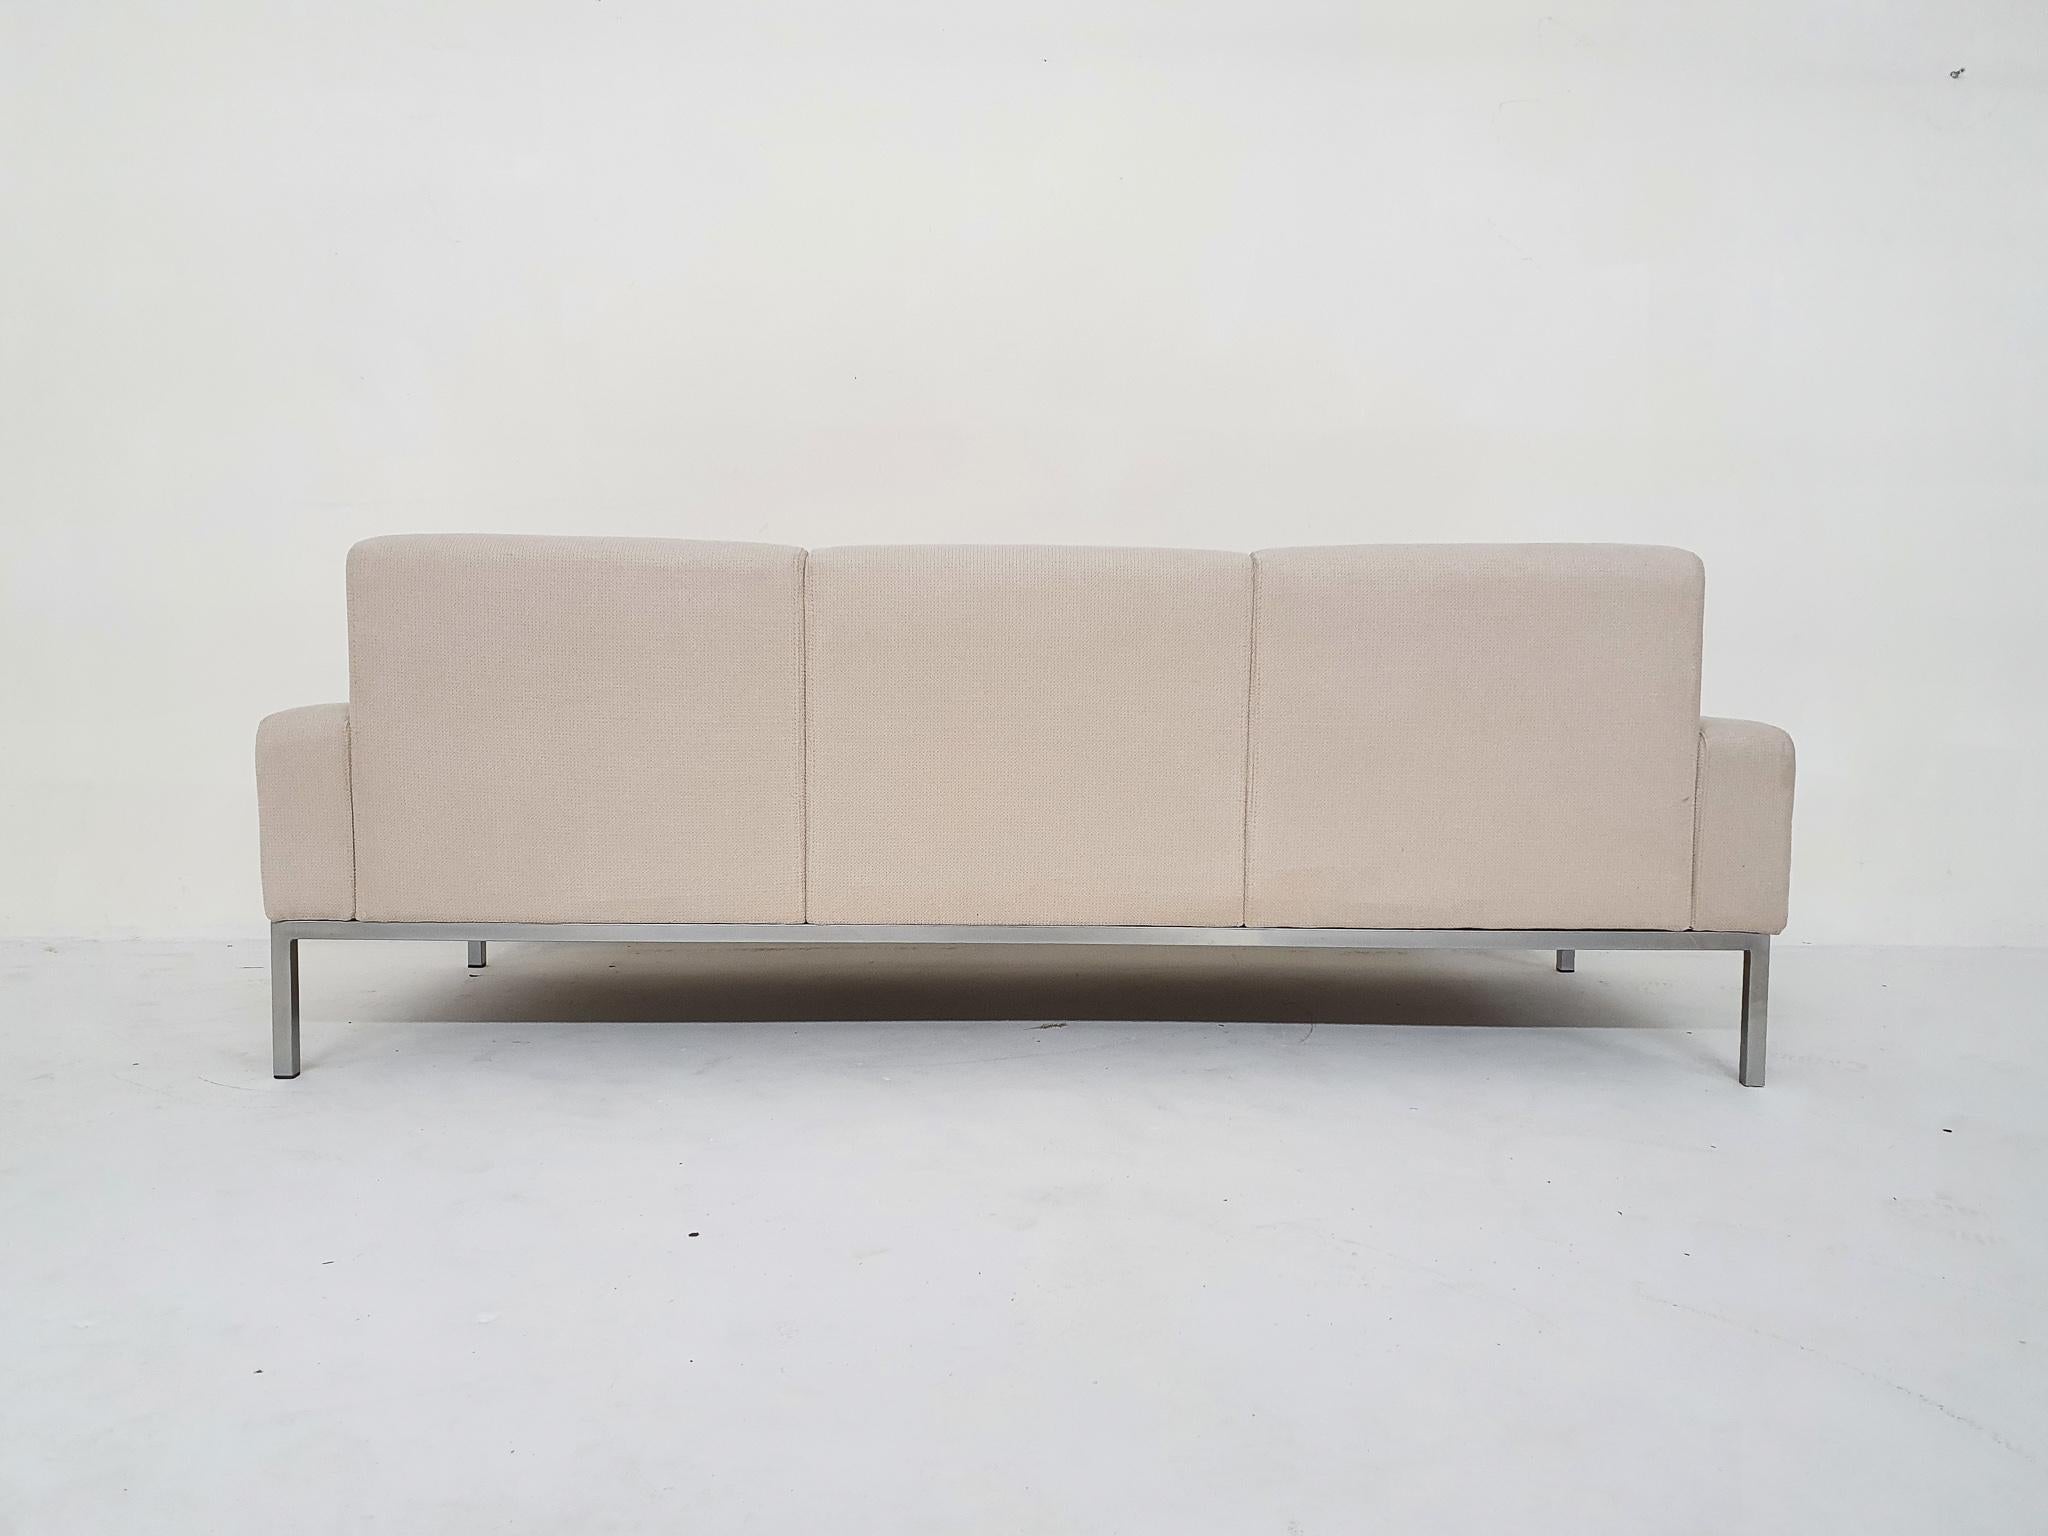 Metal Three-Seater Sofa Attrb to Gelderland, The Netherlands 1950's For Sale